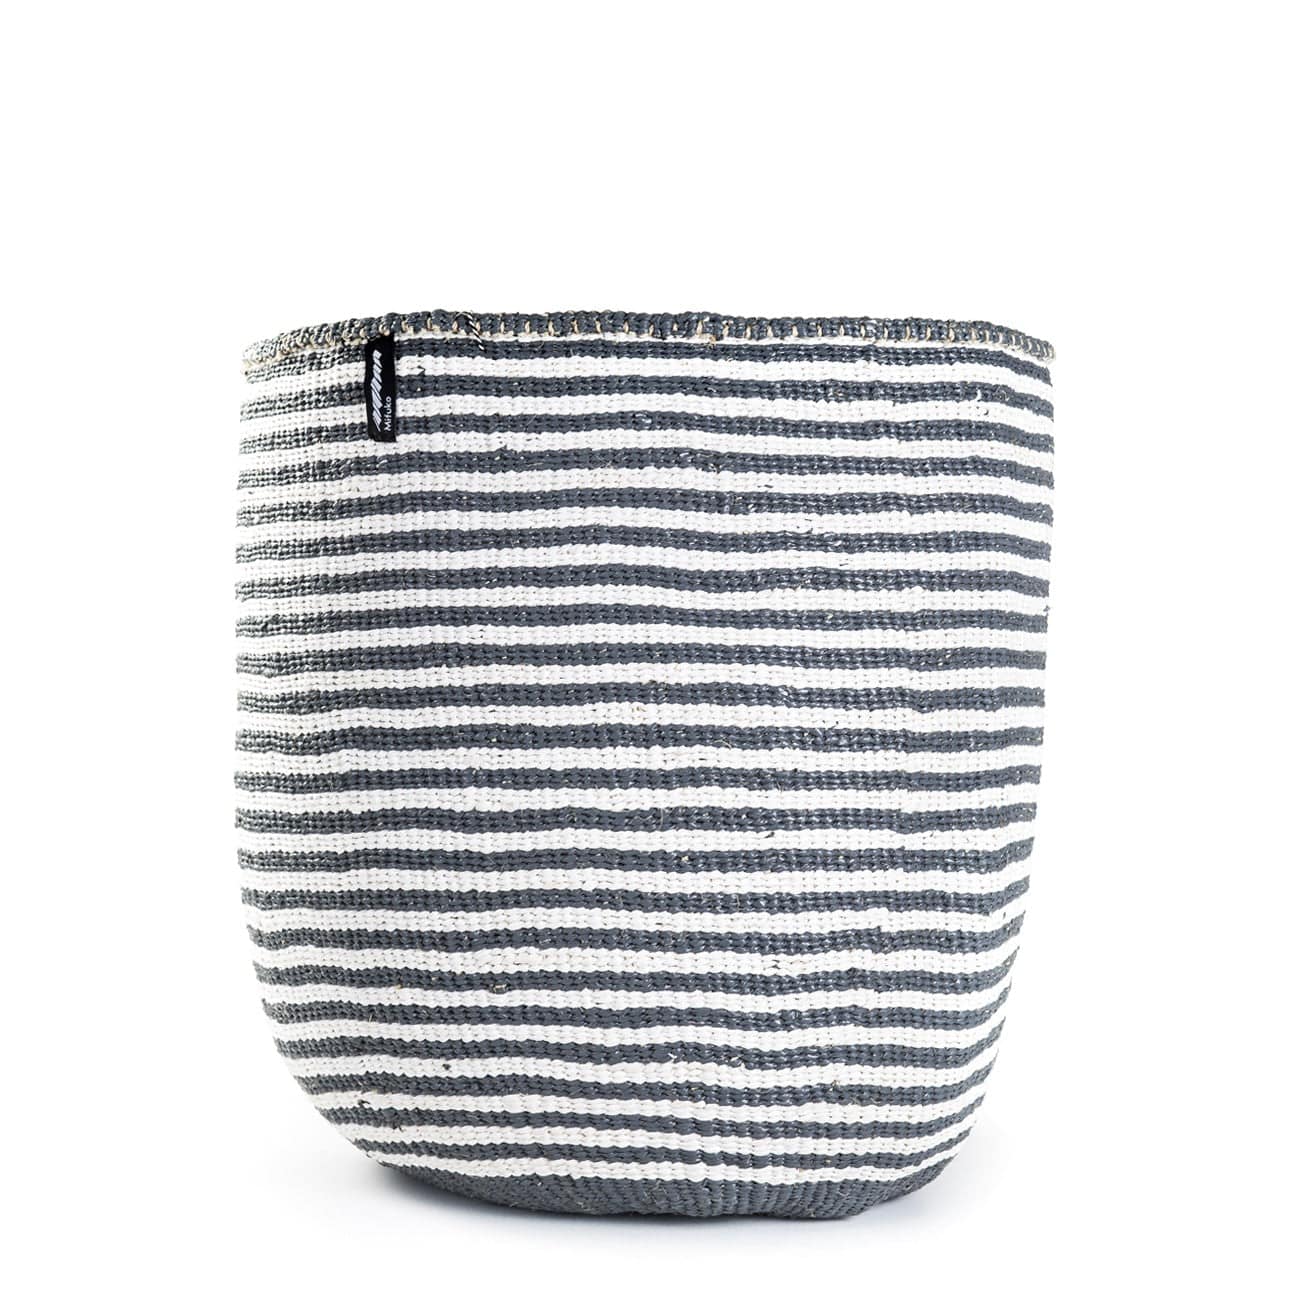 Mifuko Partly recycled plastic and sisal Medium size basket L Kiondo basket | Thin grey stripes L